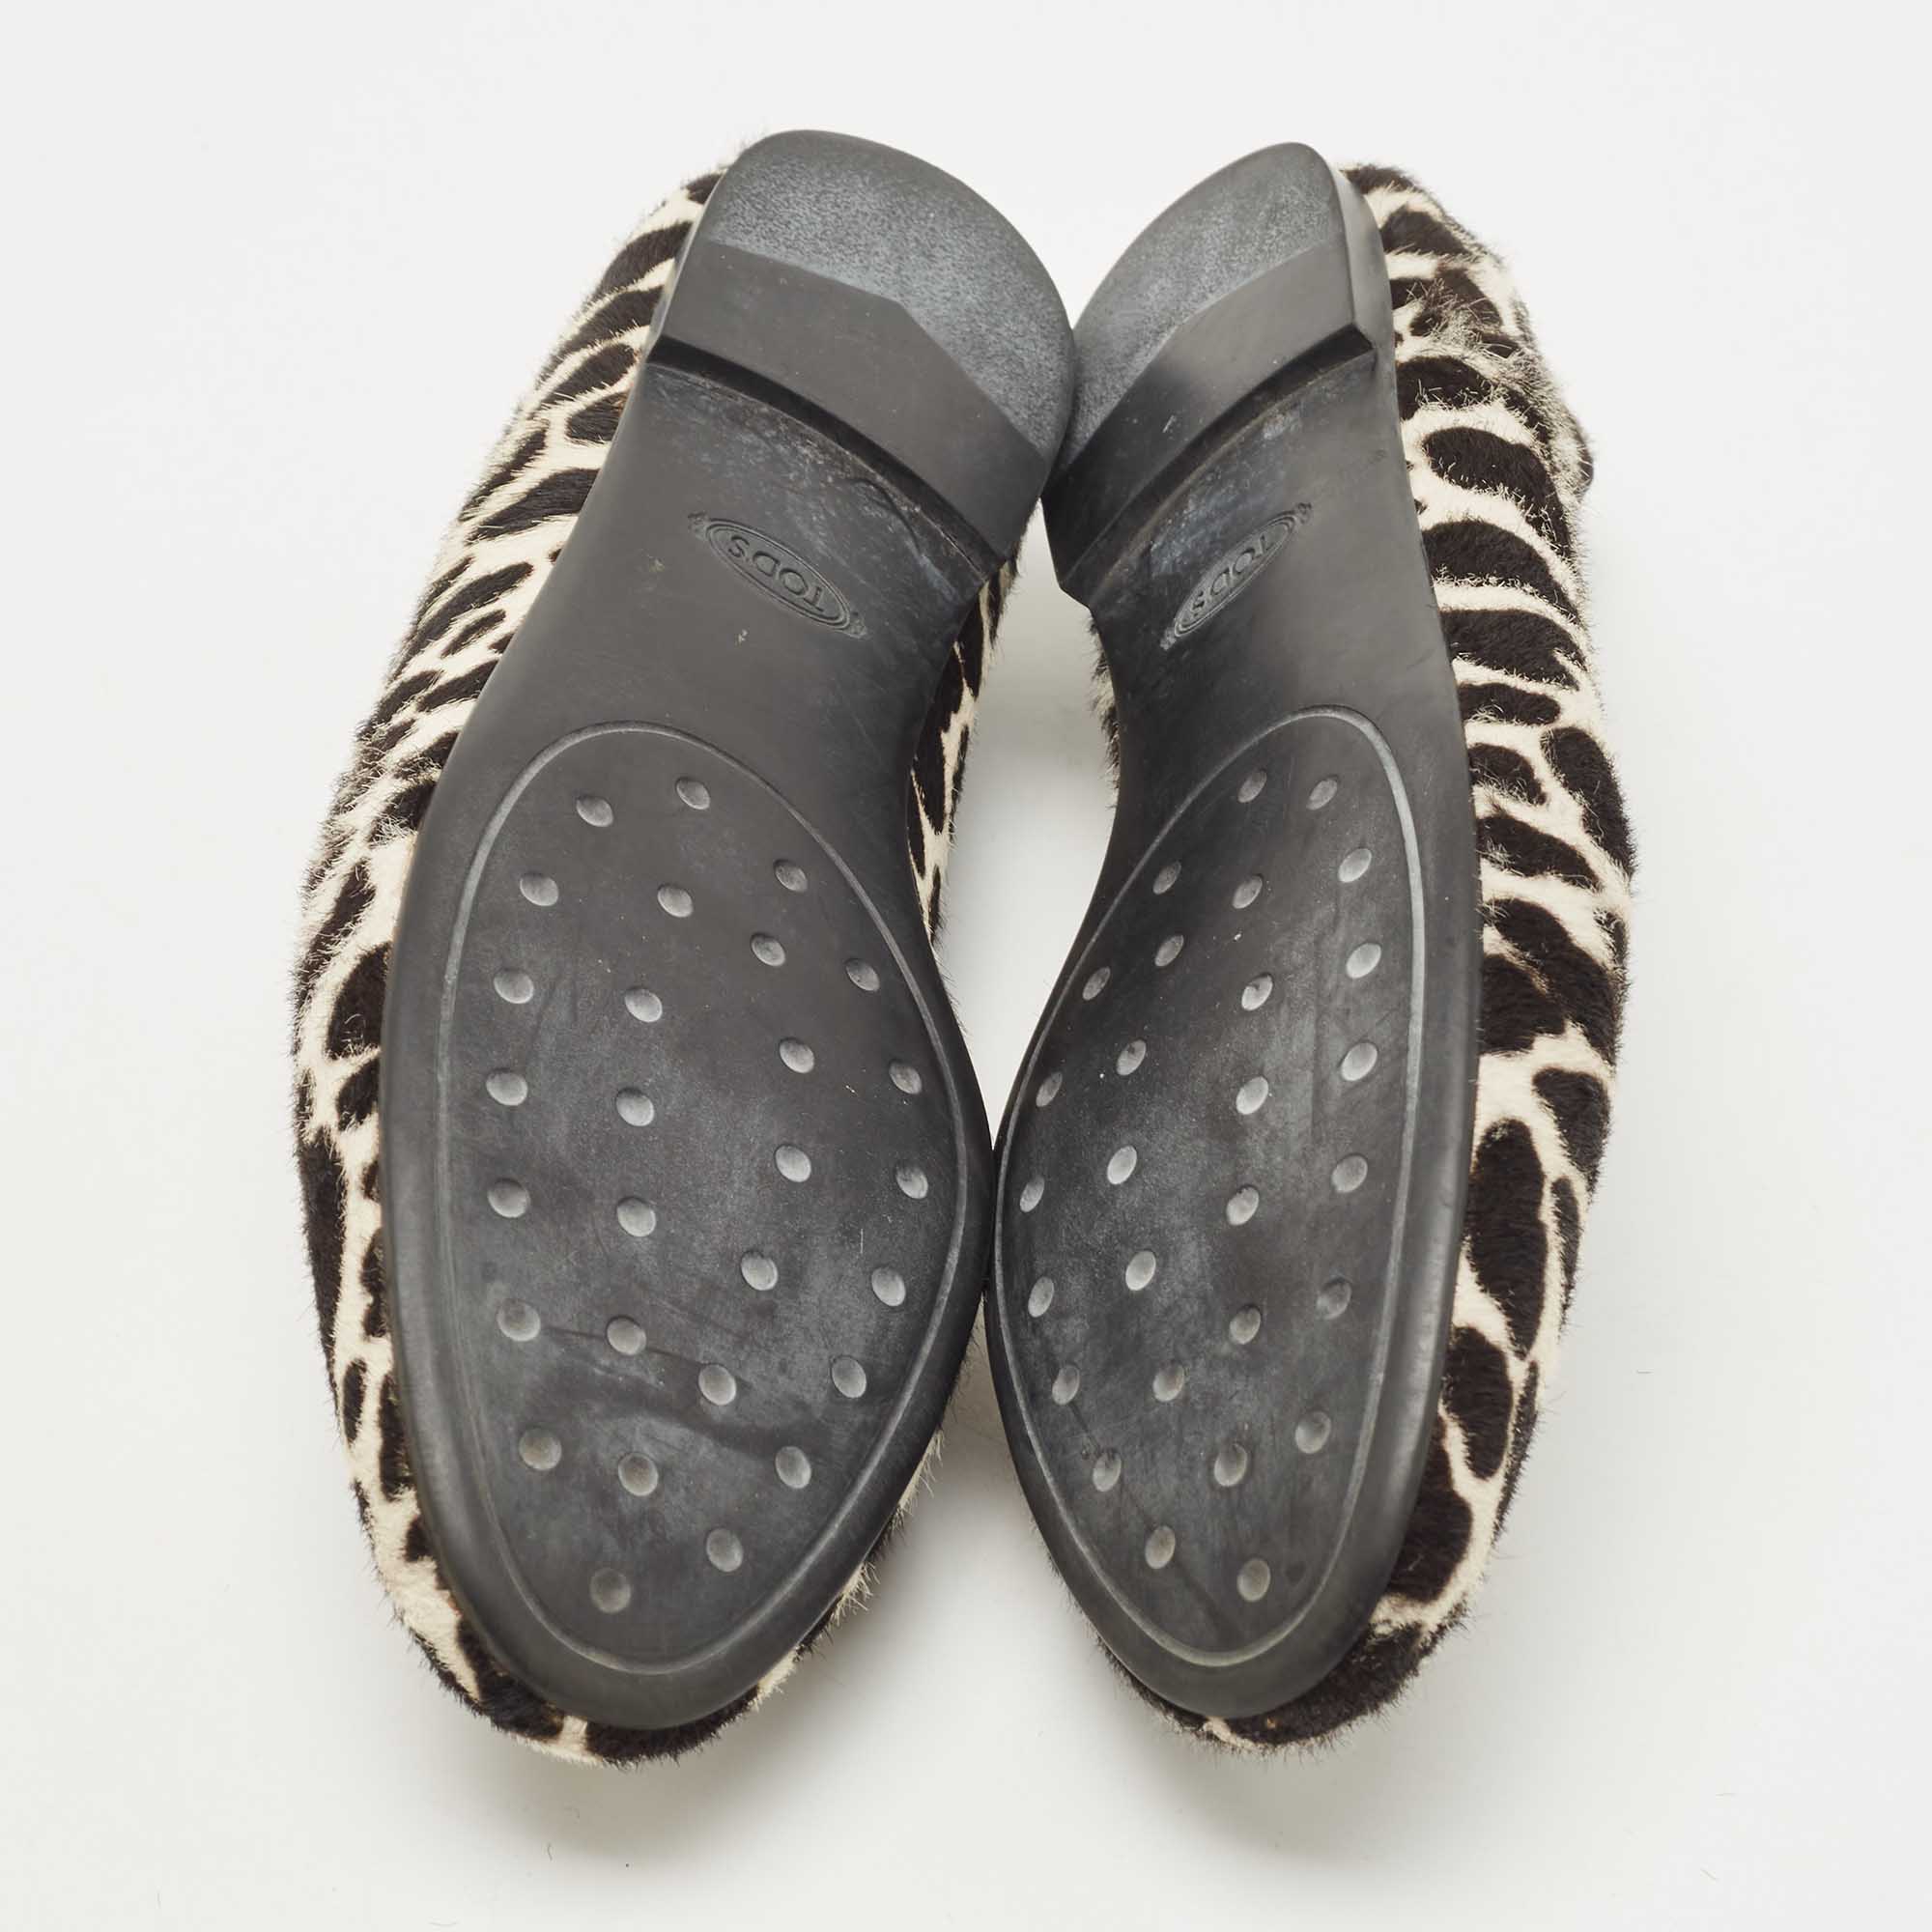 Tod's Black/White Leopard Print Calf Hair Smoking Slippers Size 36.5